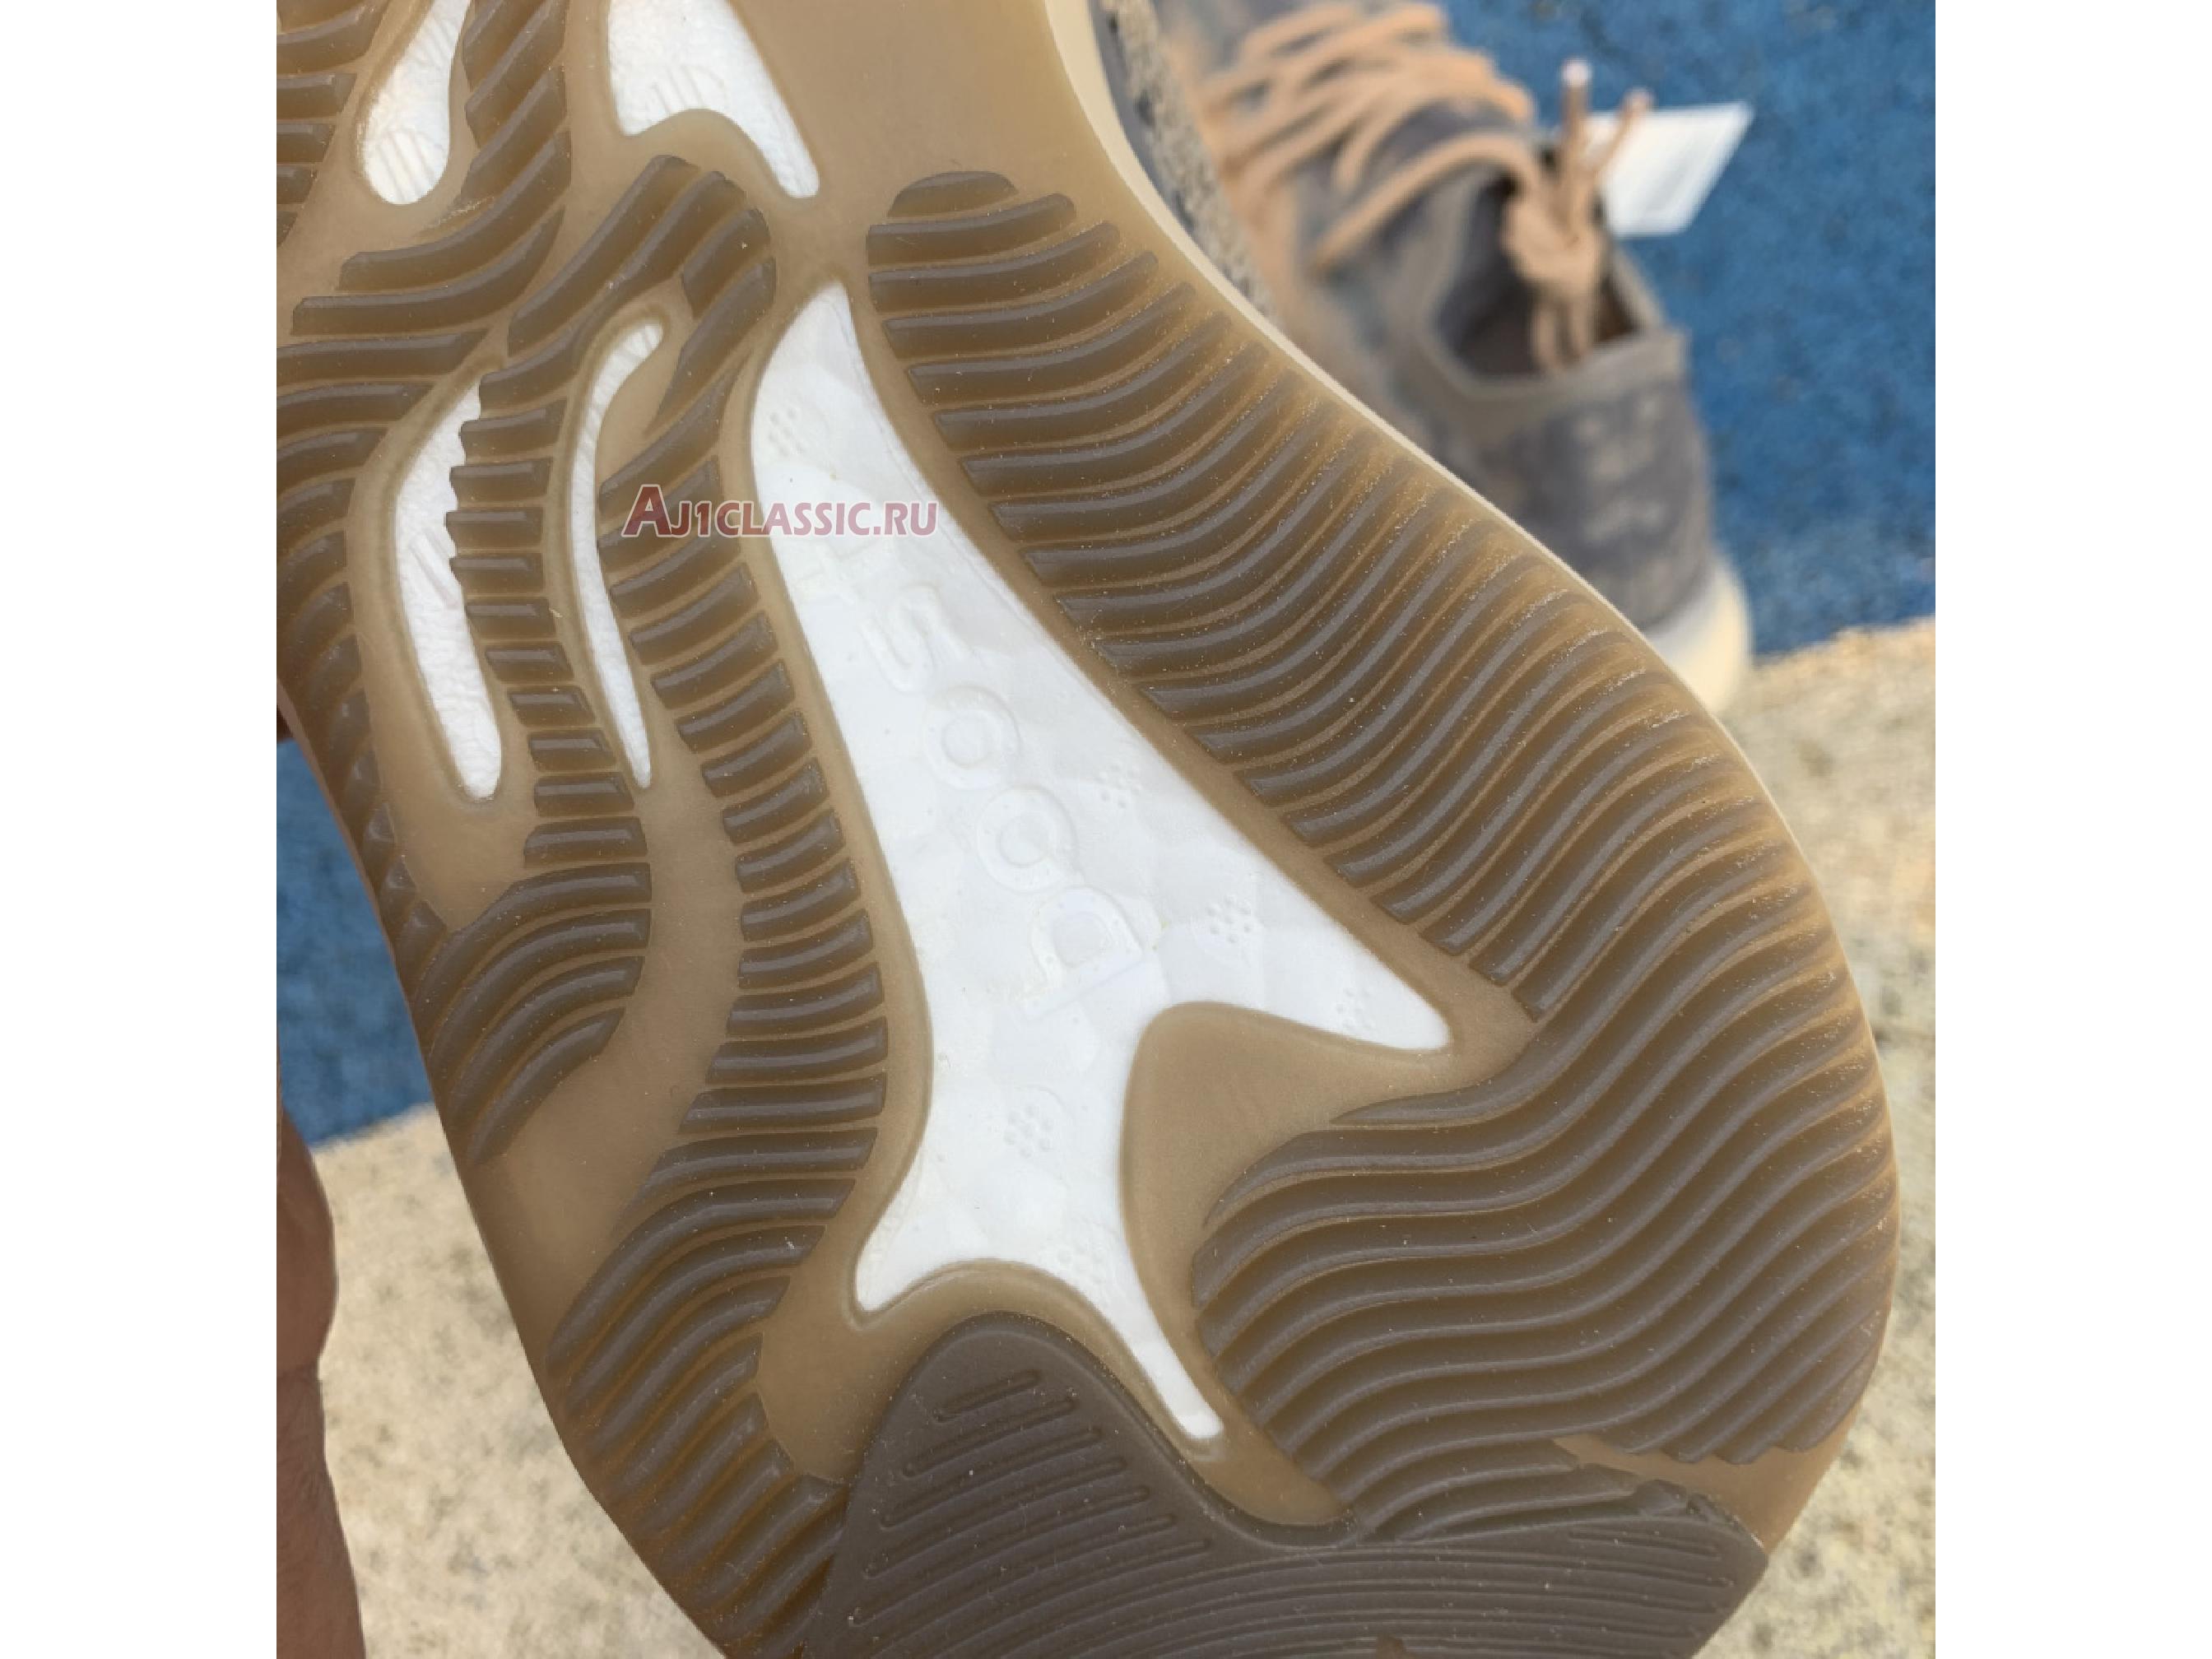 Adidas Yeezy Boost 380 "Mist Reflective" FX9846